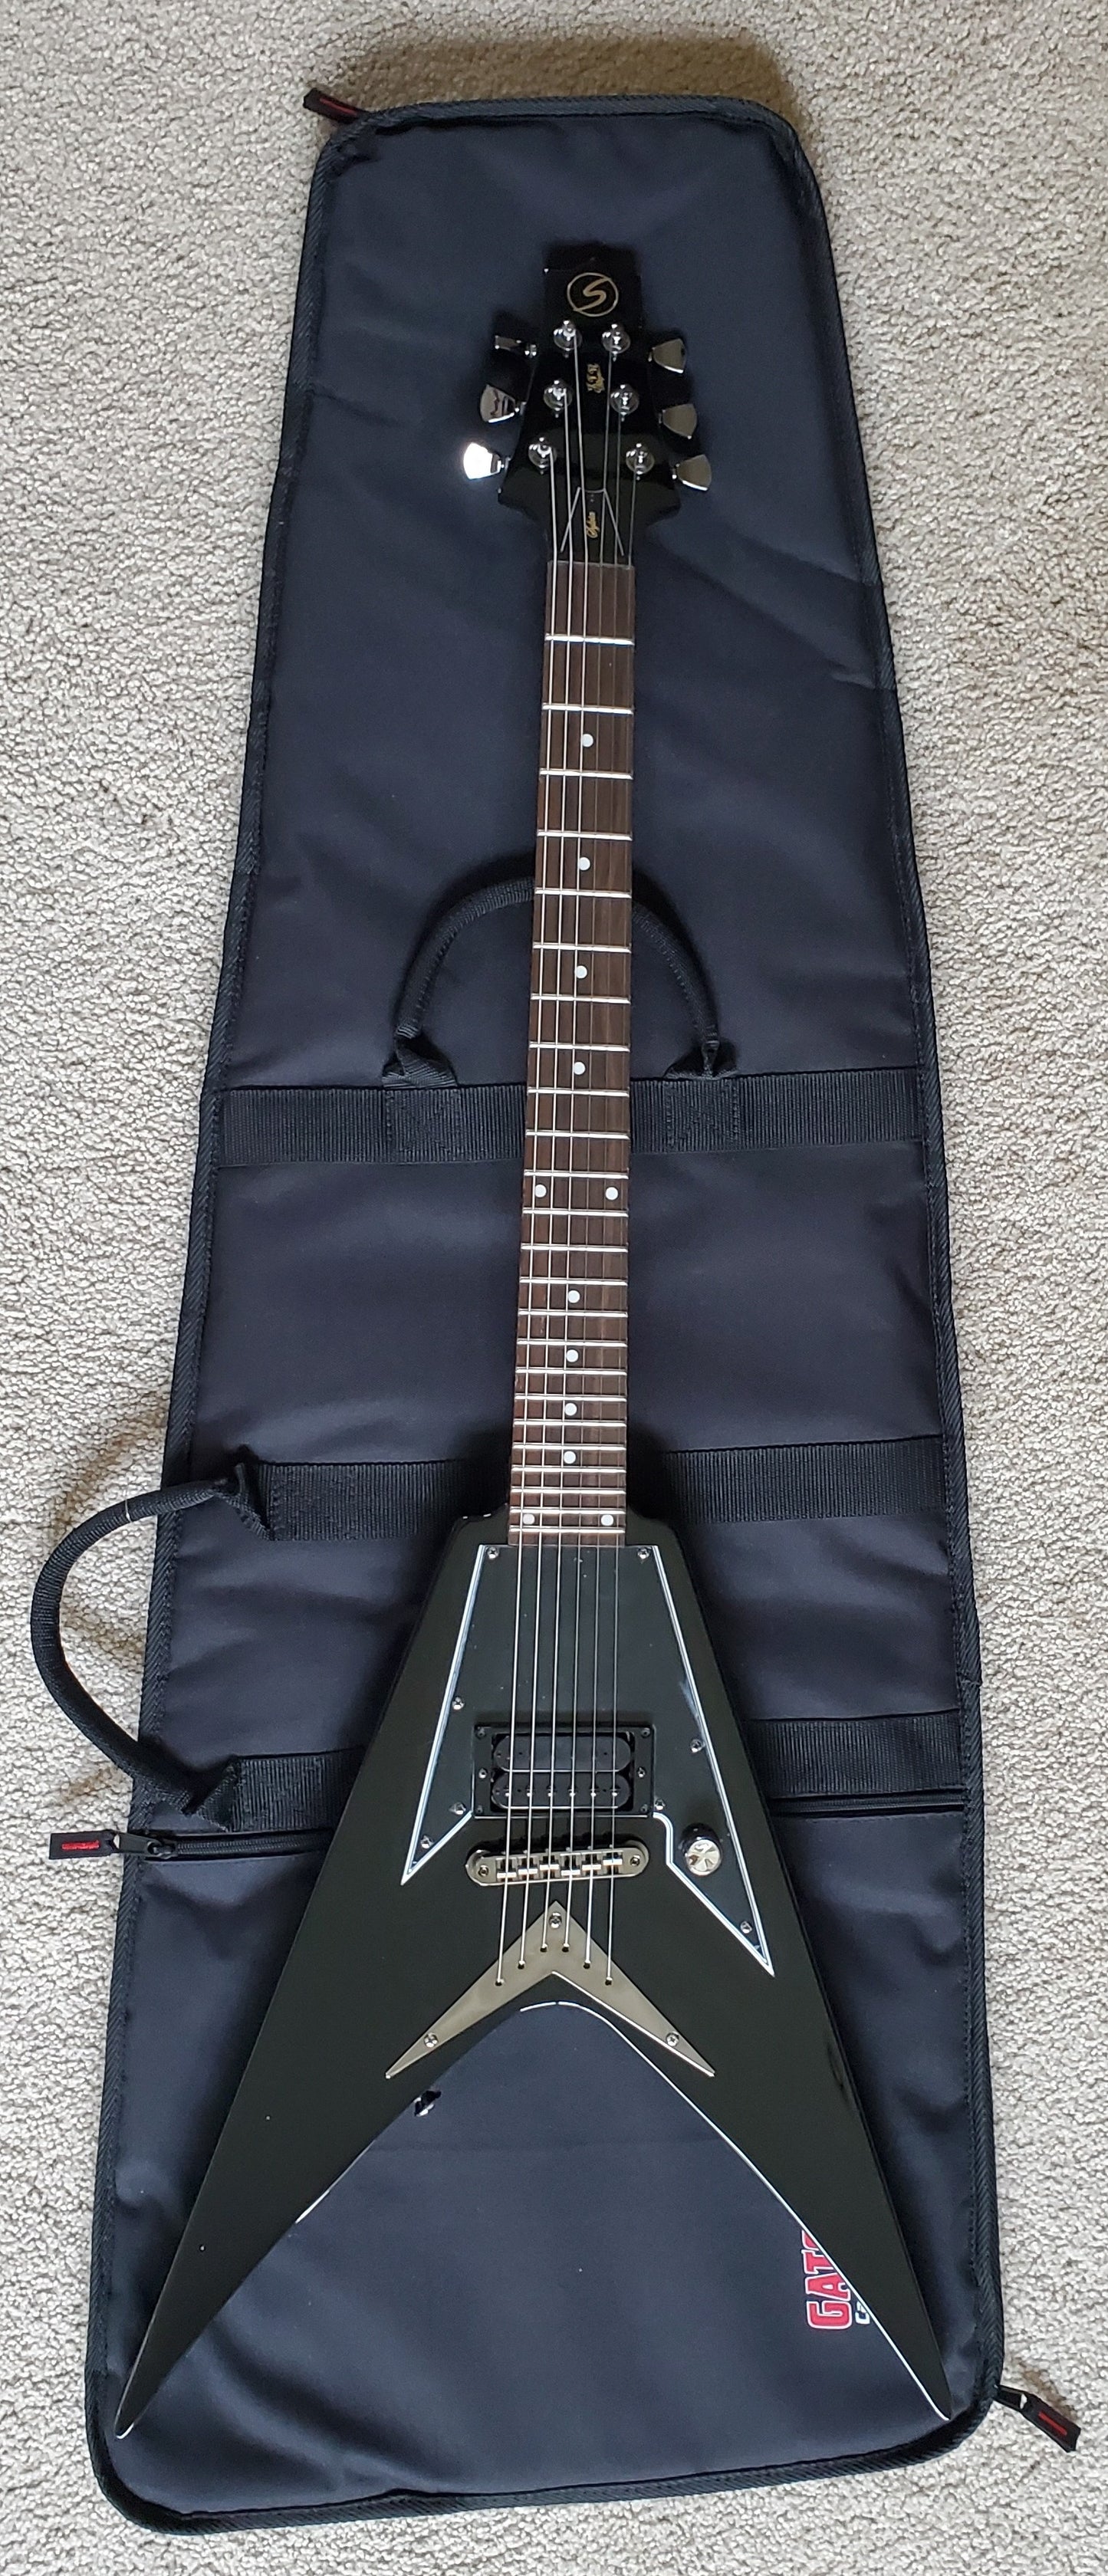 Samick SV10 Flying V Style Electric Guitar, Black Finish - New Gator Extreme Gig Bag*